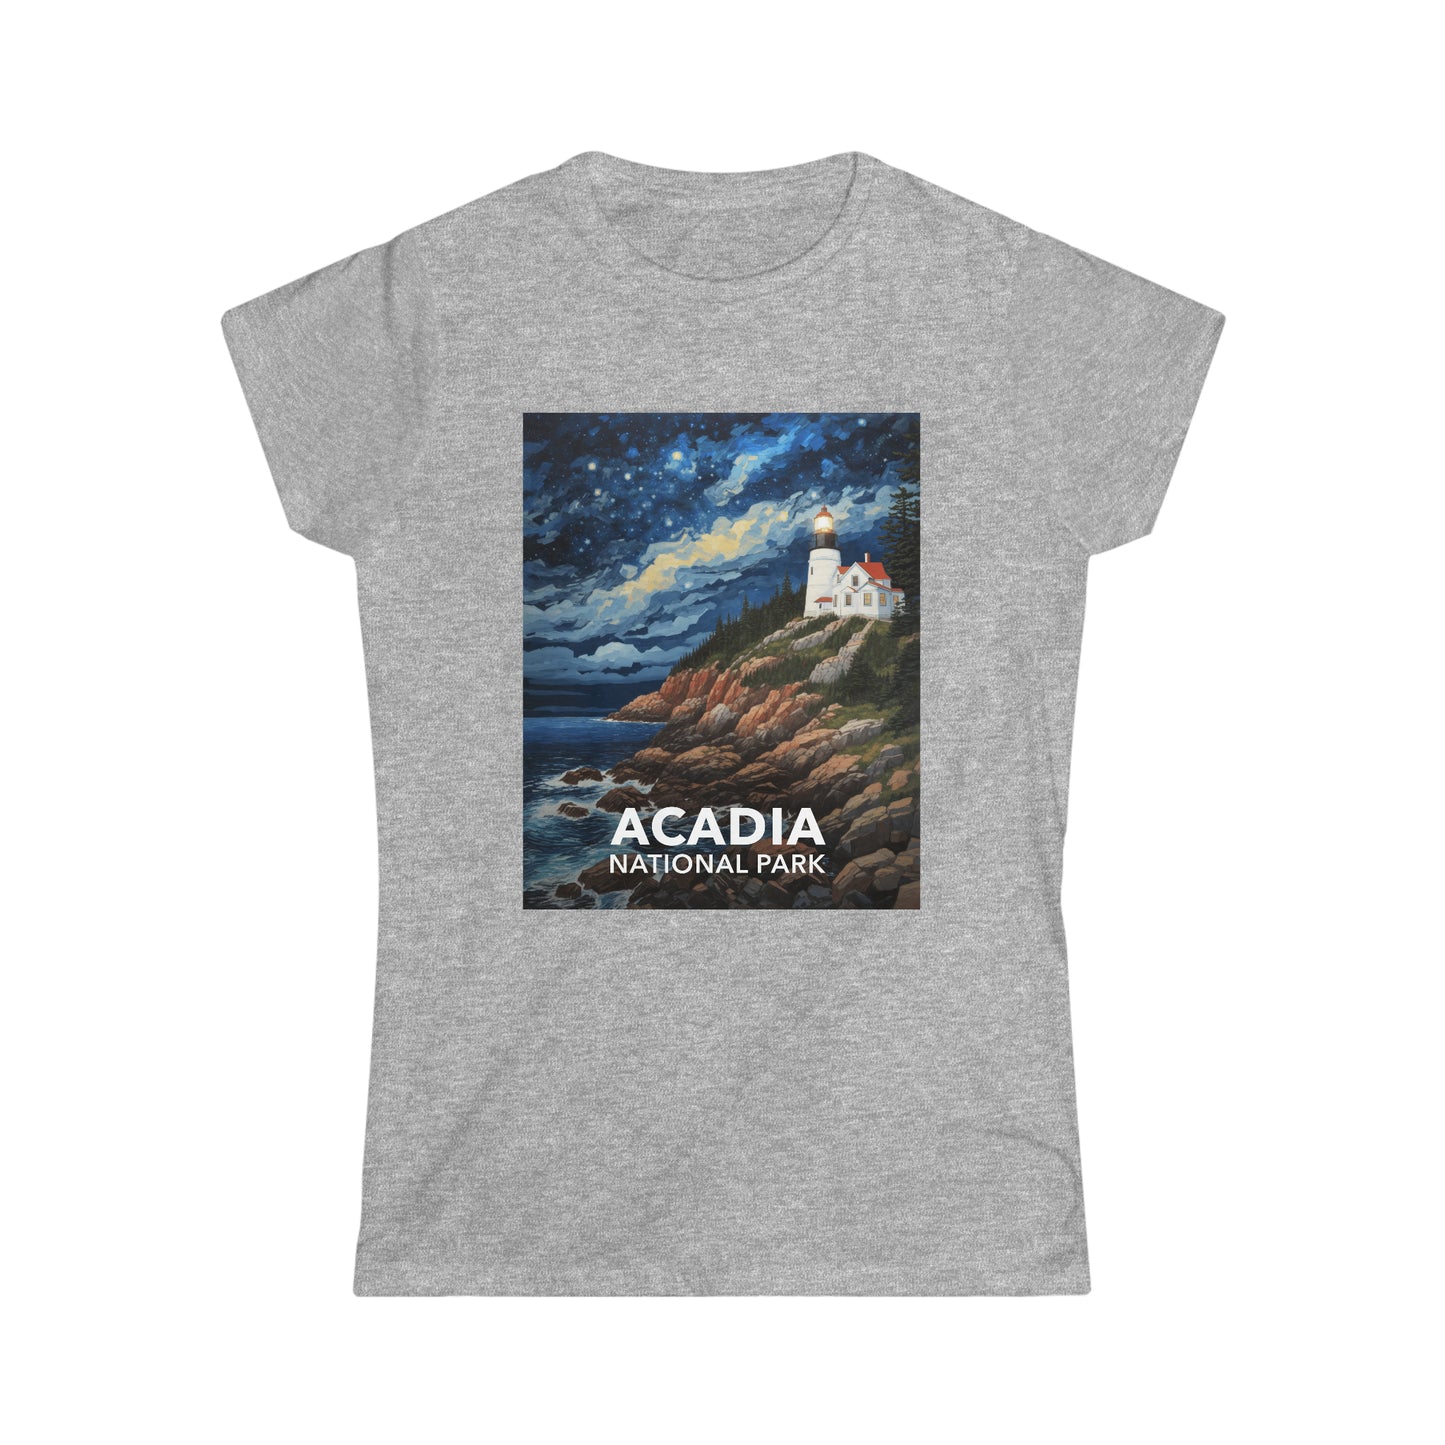 Acadia National Park T-Shirt - Women's Starry Night